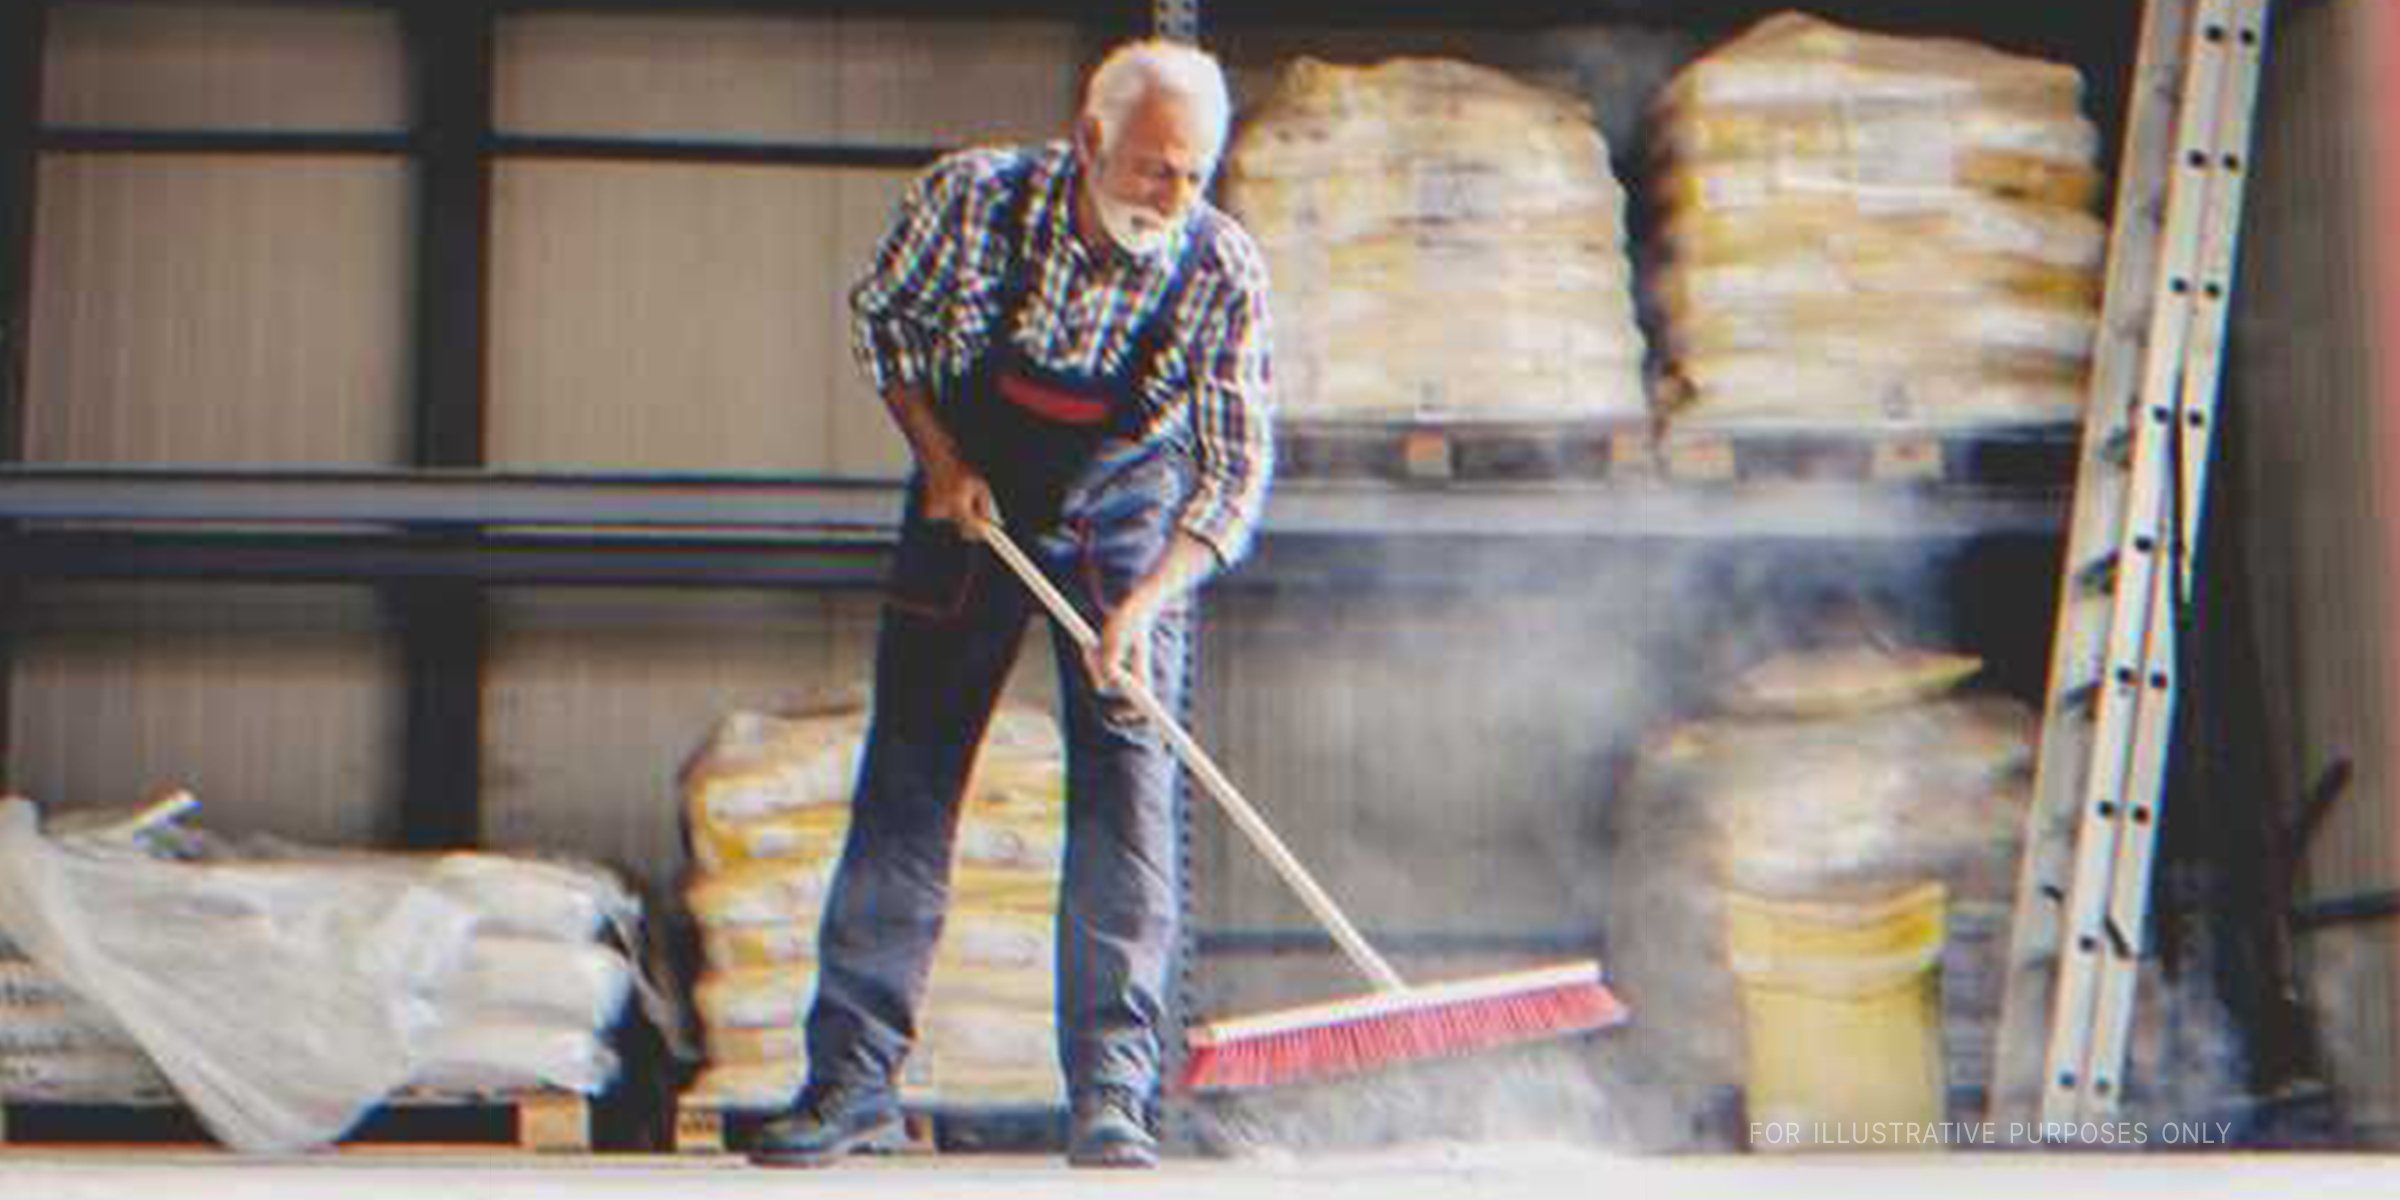 Anciano barriendo con una escoba. | Fuente: Shutterstock